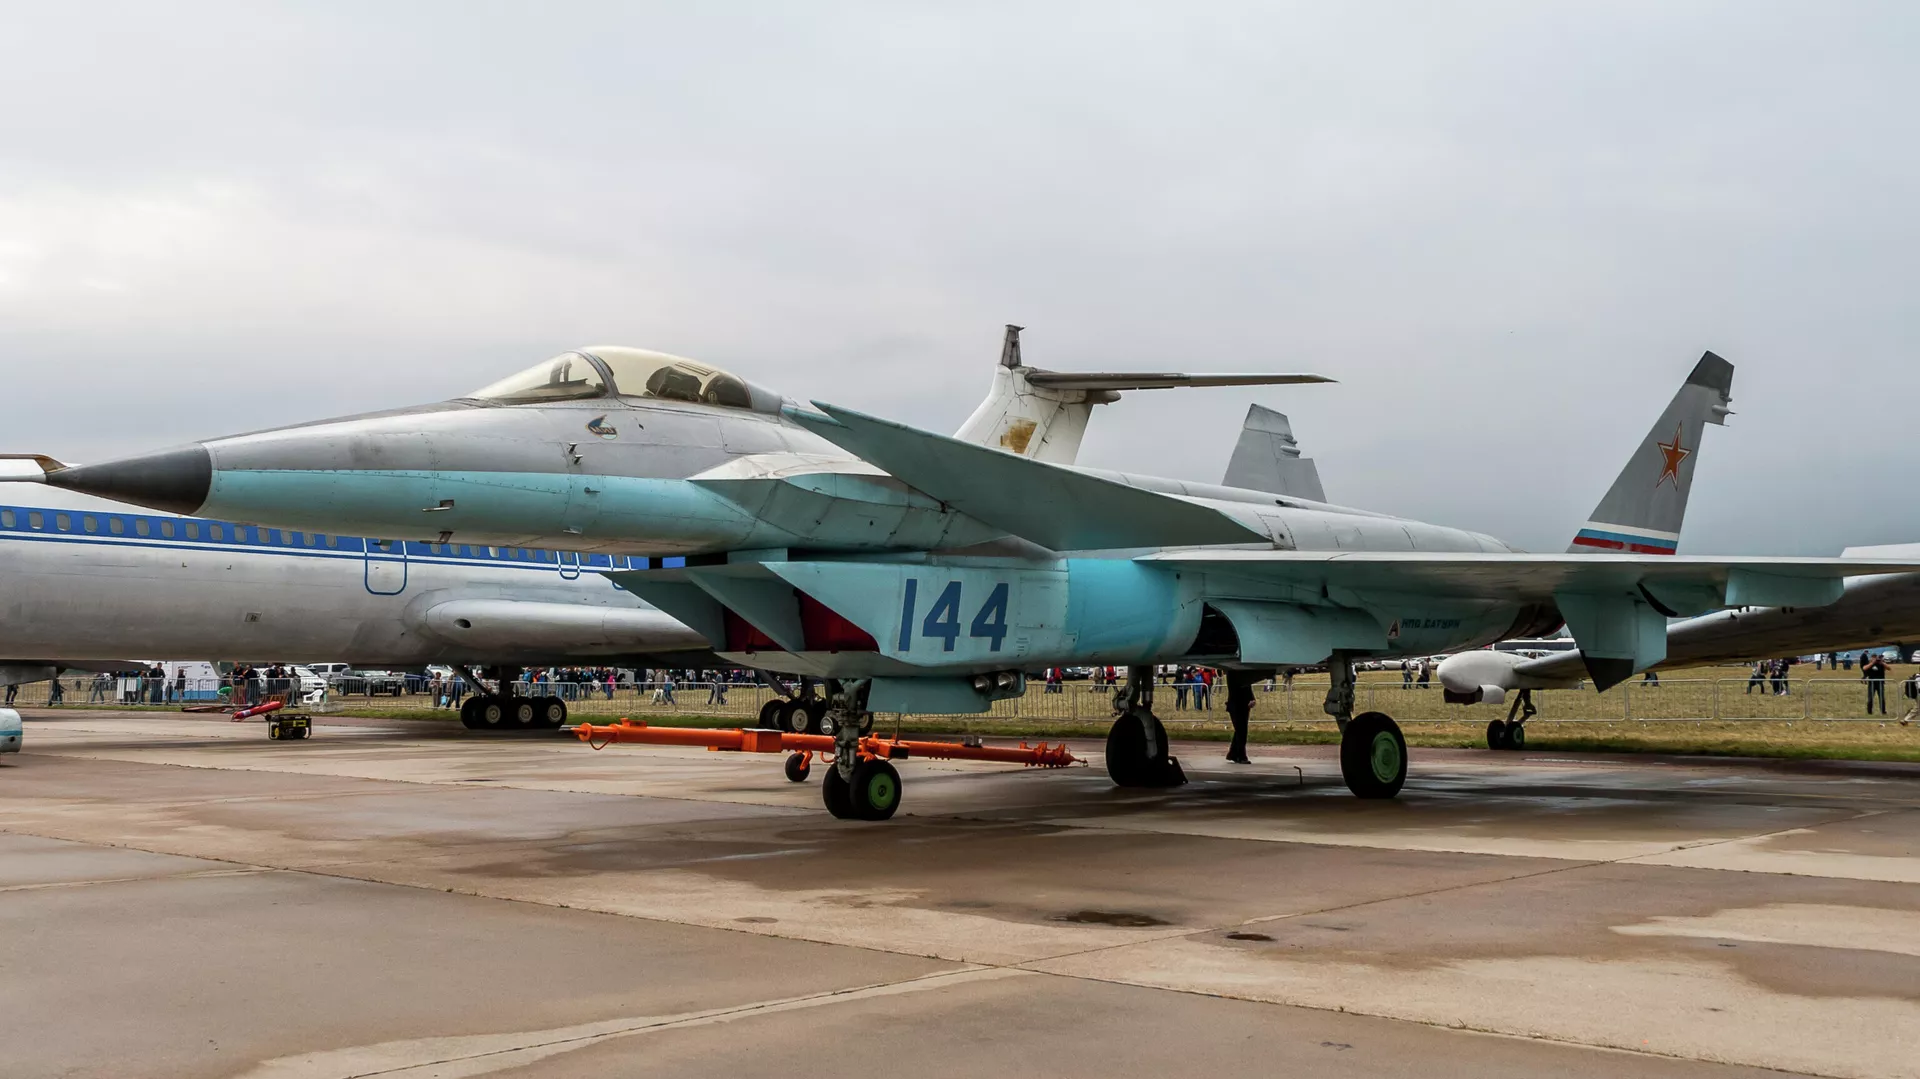 MAKS-2015 での第 5 世代戦闘機 MiG-1.44 - RIA ノーボスチ、1920 年、2019 年 8 月 12 日